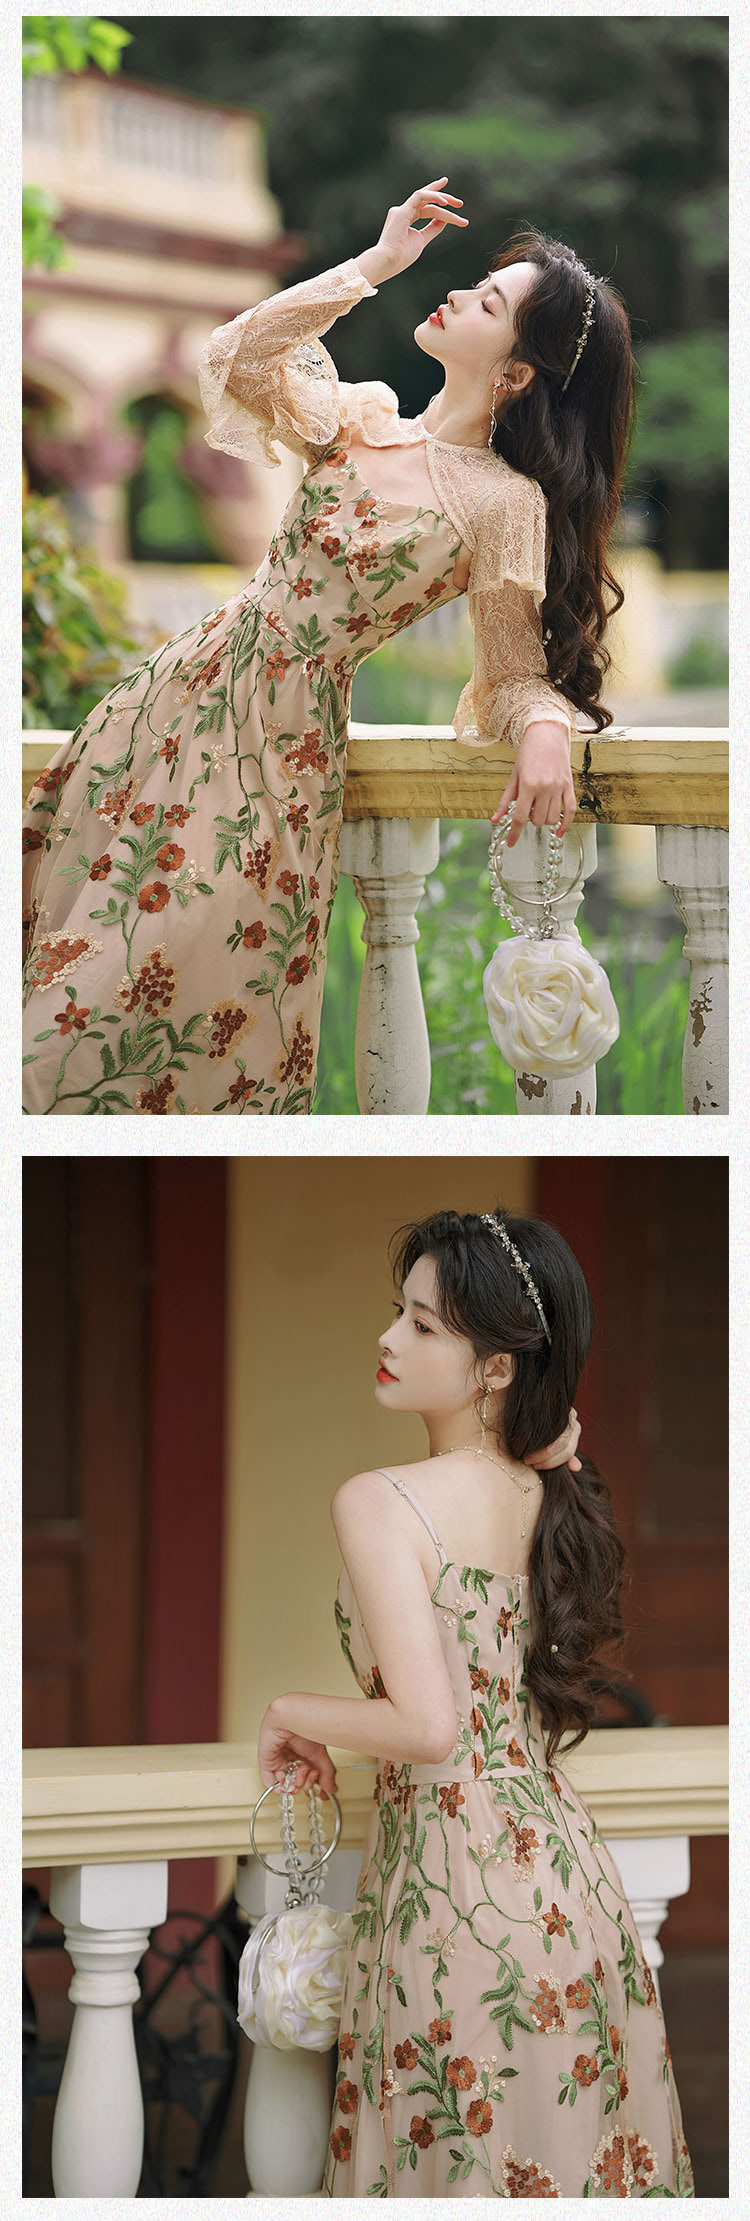 Romantic-Vintage-Floral-Embroidery-Lace-Short-Cardigan-Slip-Dress-Set10